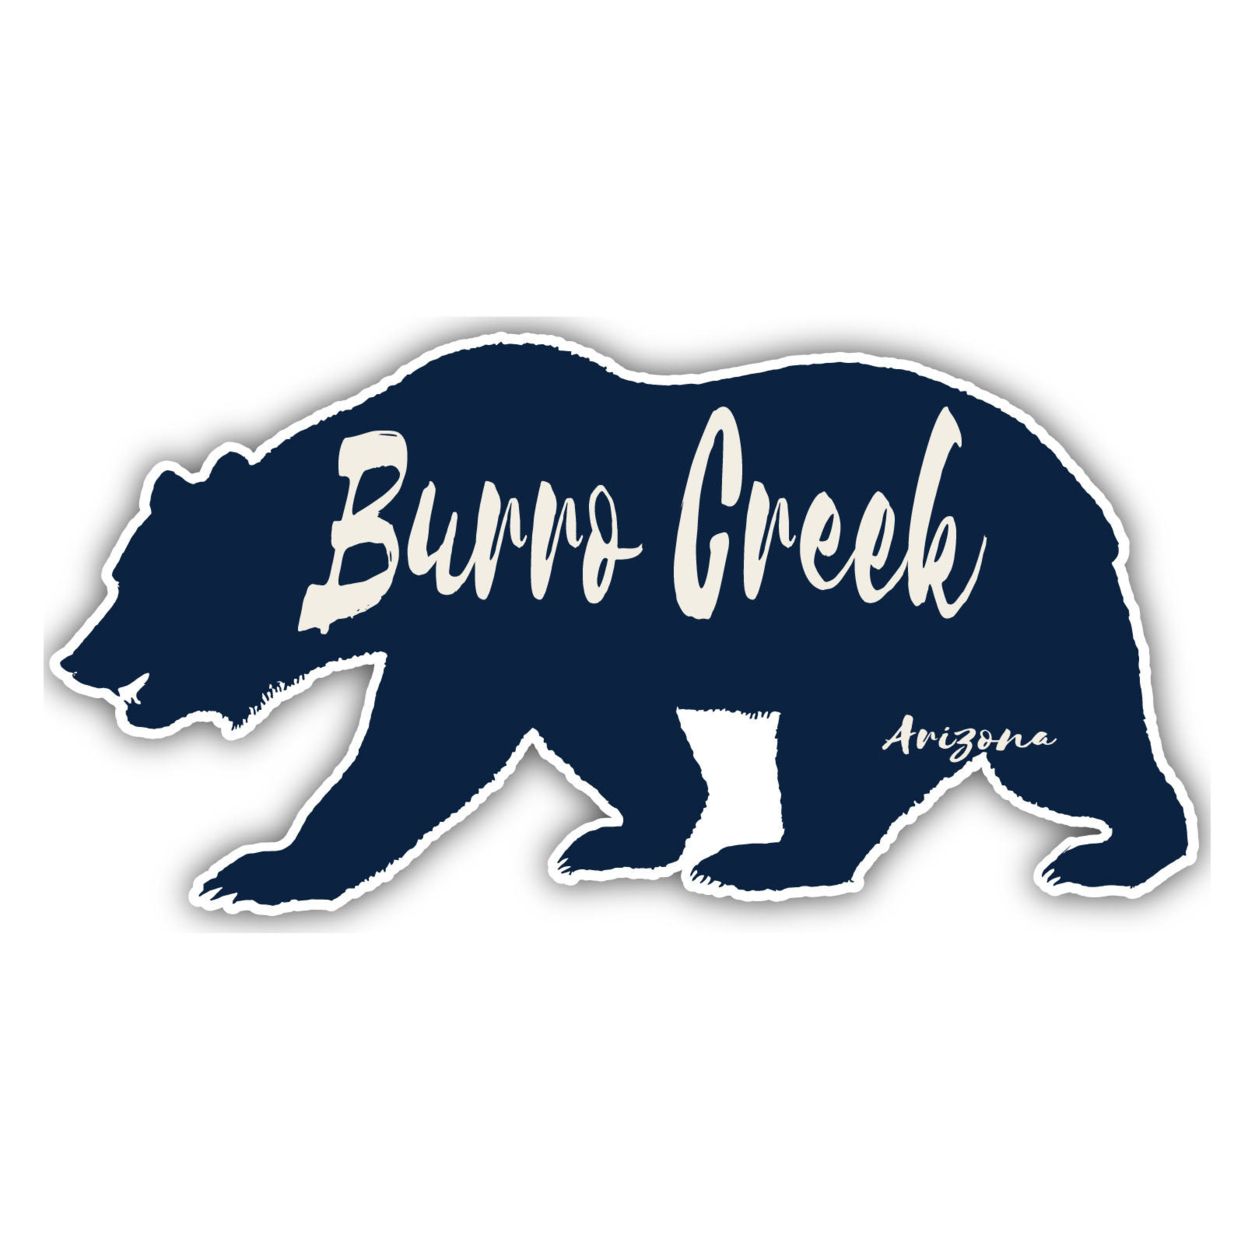 Burro Creek Arizona Souvenir Decorative Stickers (Choose Theme And Size) - Single Unit, 10-Inch, Bear